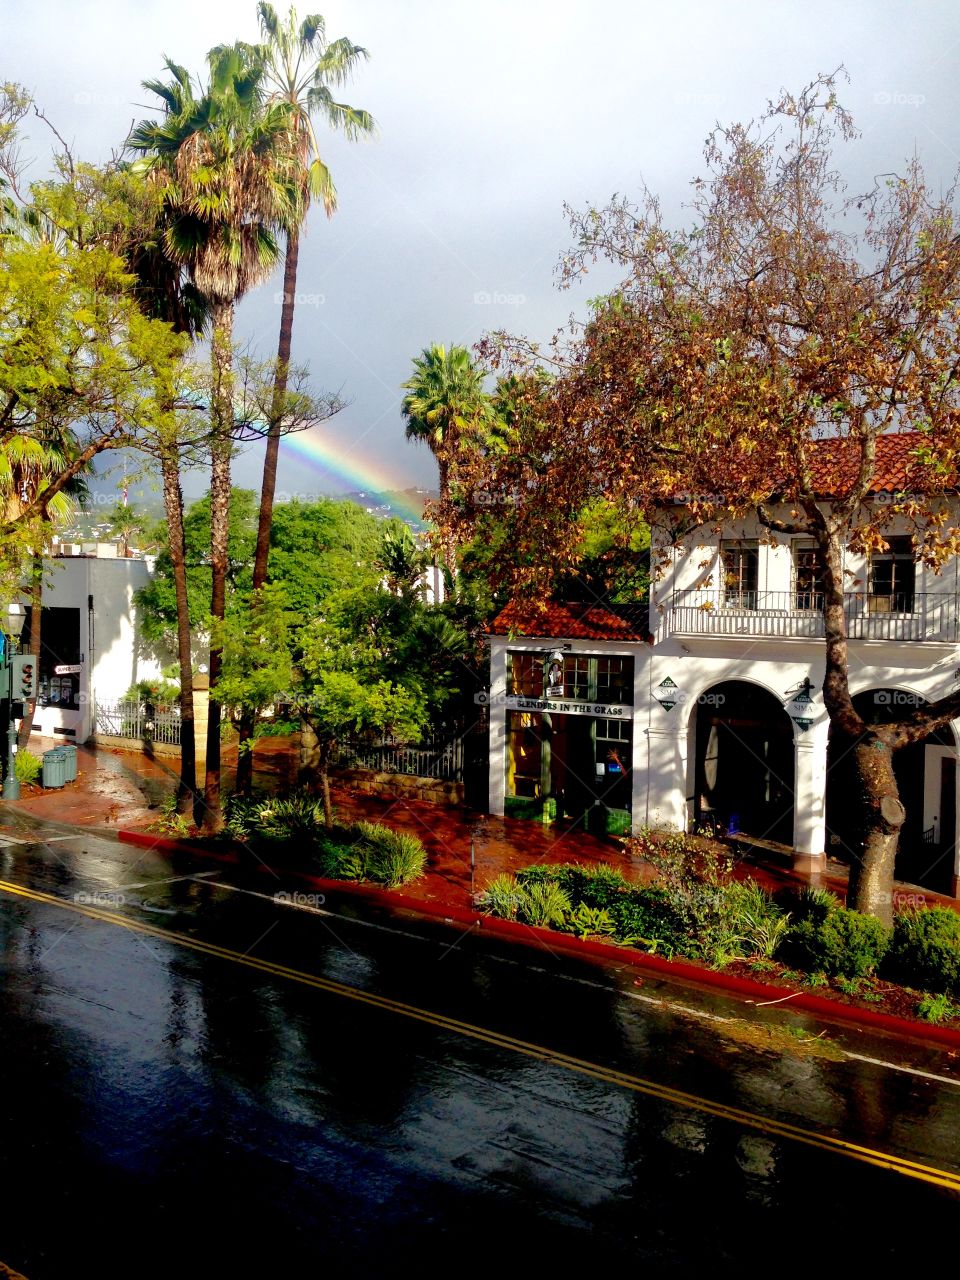 Rainbow in Santa Barbara